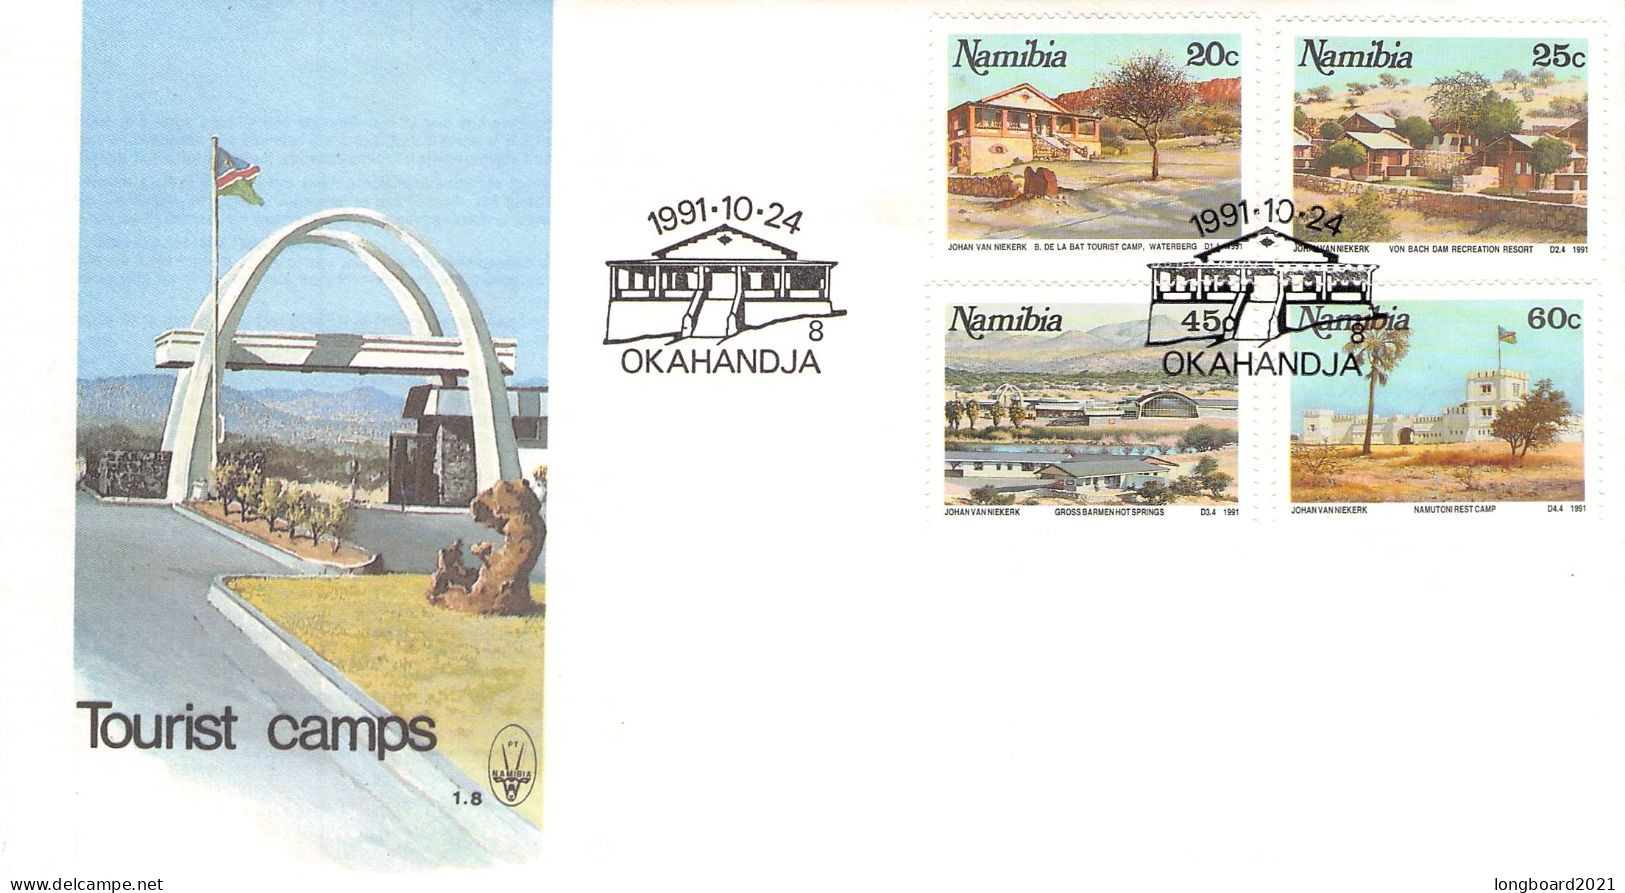 NAMIBIA - FDC 1991 TOURIST CAMPS / 4303 - Namibie (1990- ...)